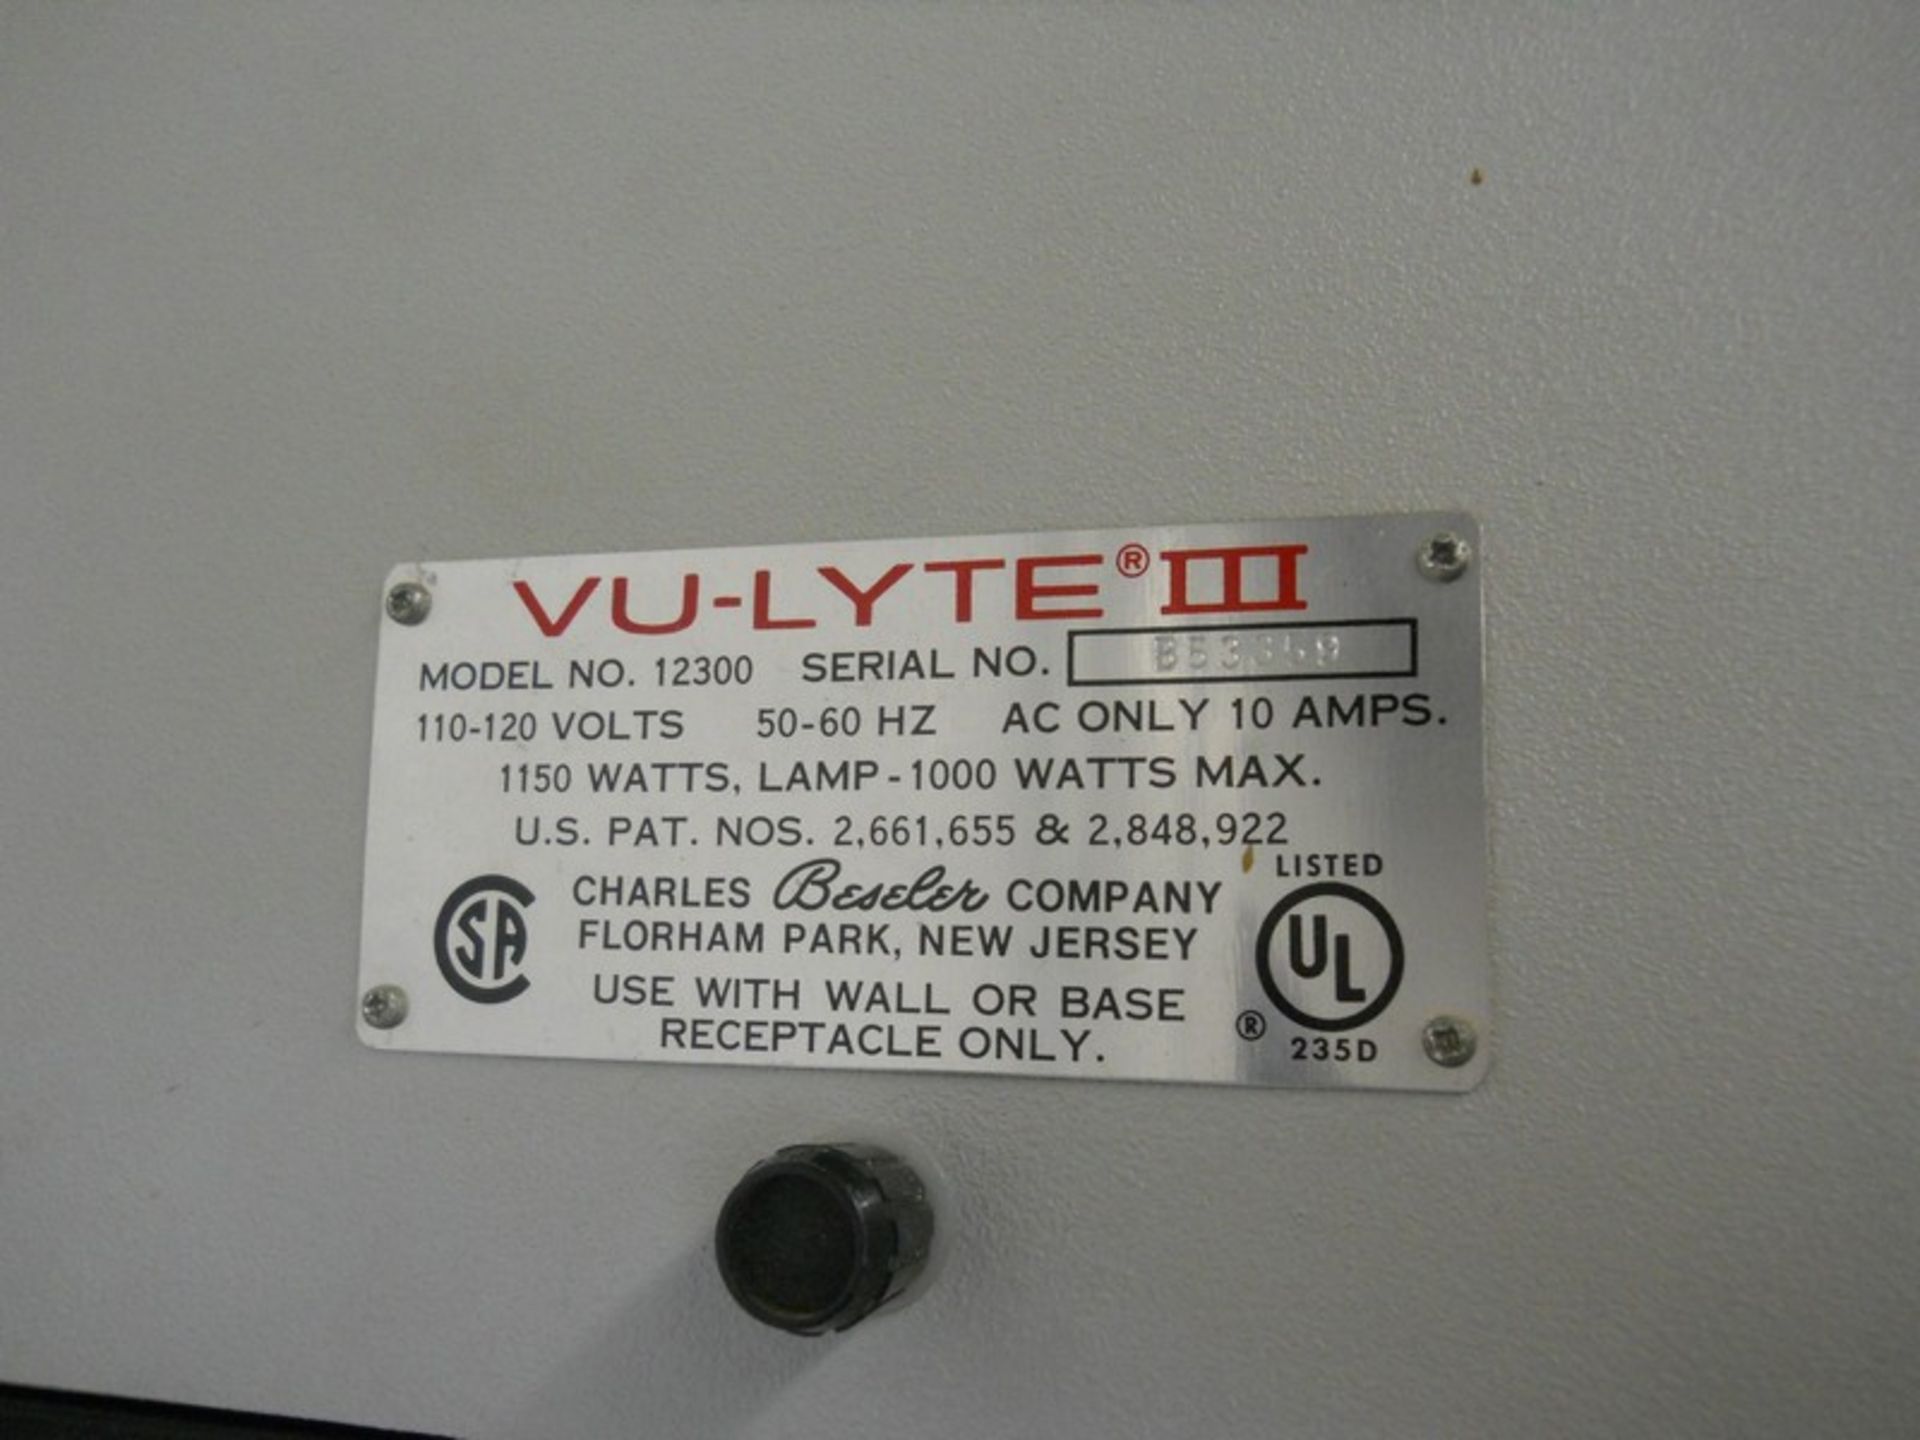 Vu-Lyte III Projector - Image 5 of 5